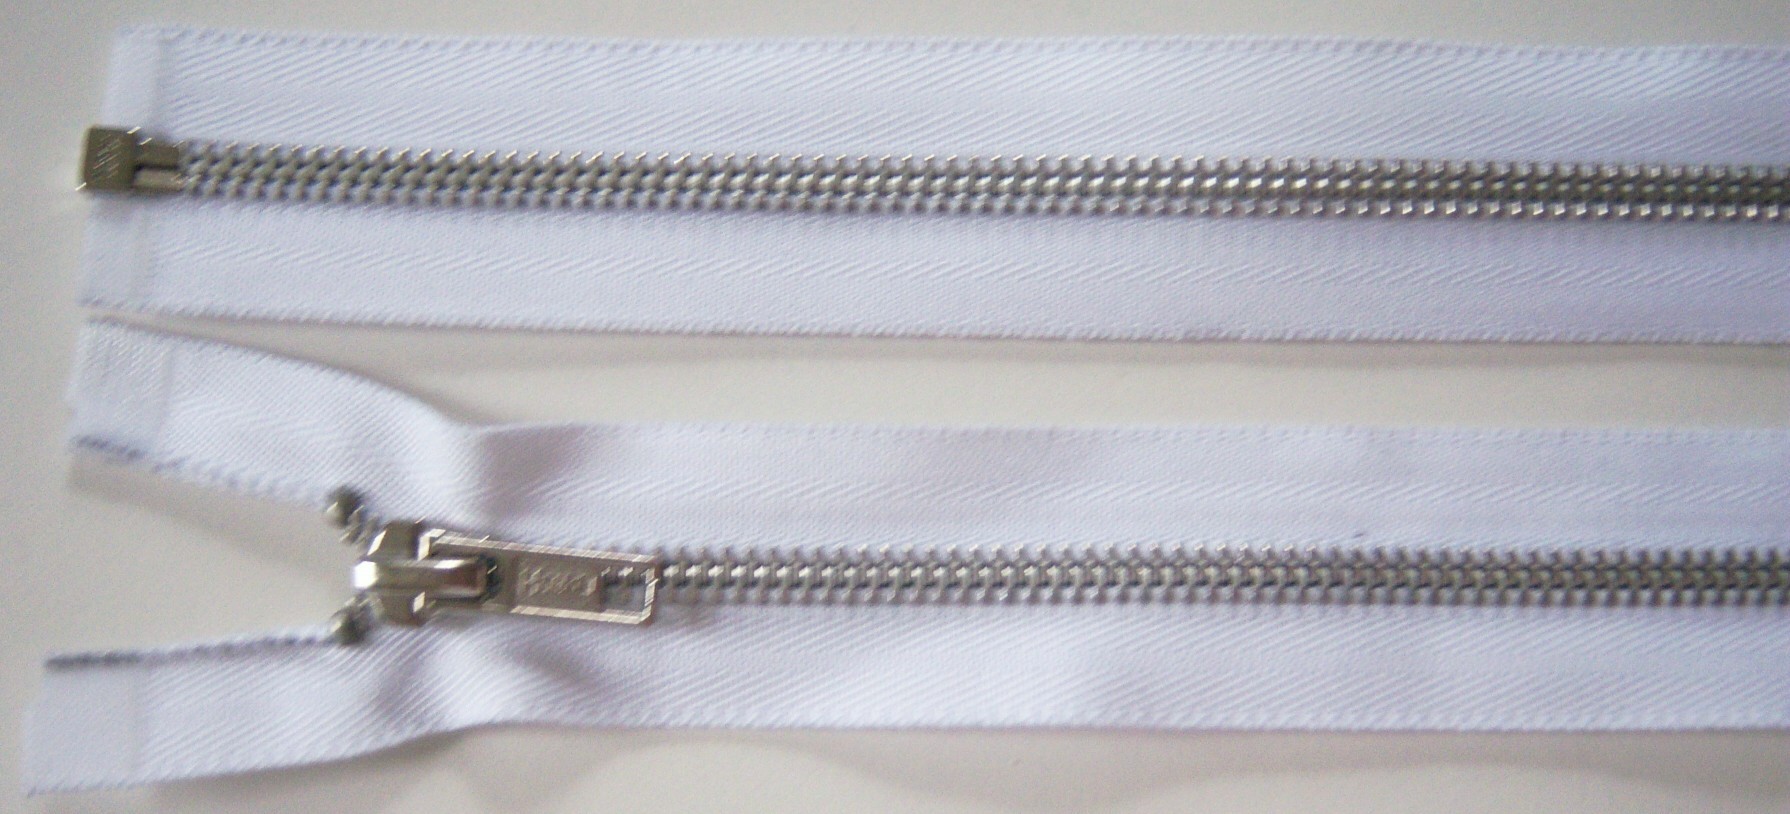 White Ideal 27 1/2" Metal Separating Zipper